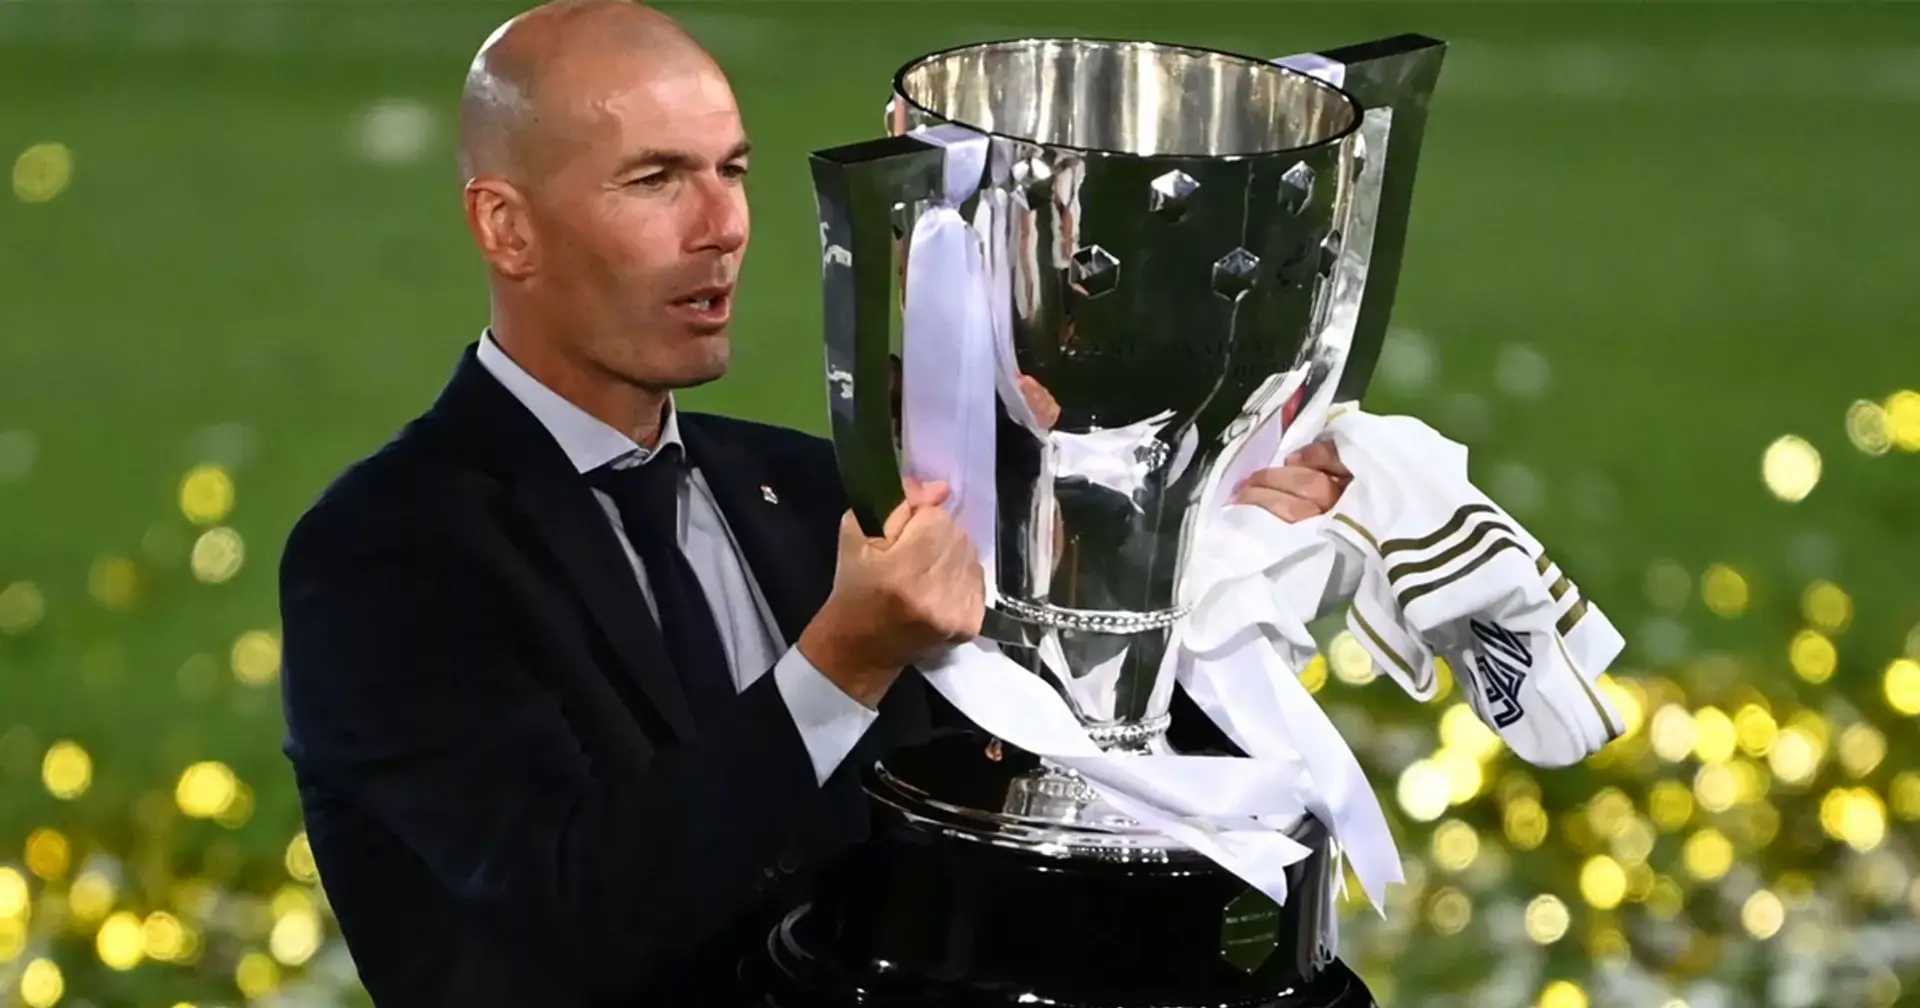 Zidane assist alla Juventus in conferenza: "Non so se rimarrò un altro anno al Real Madrid"